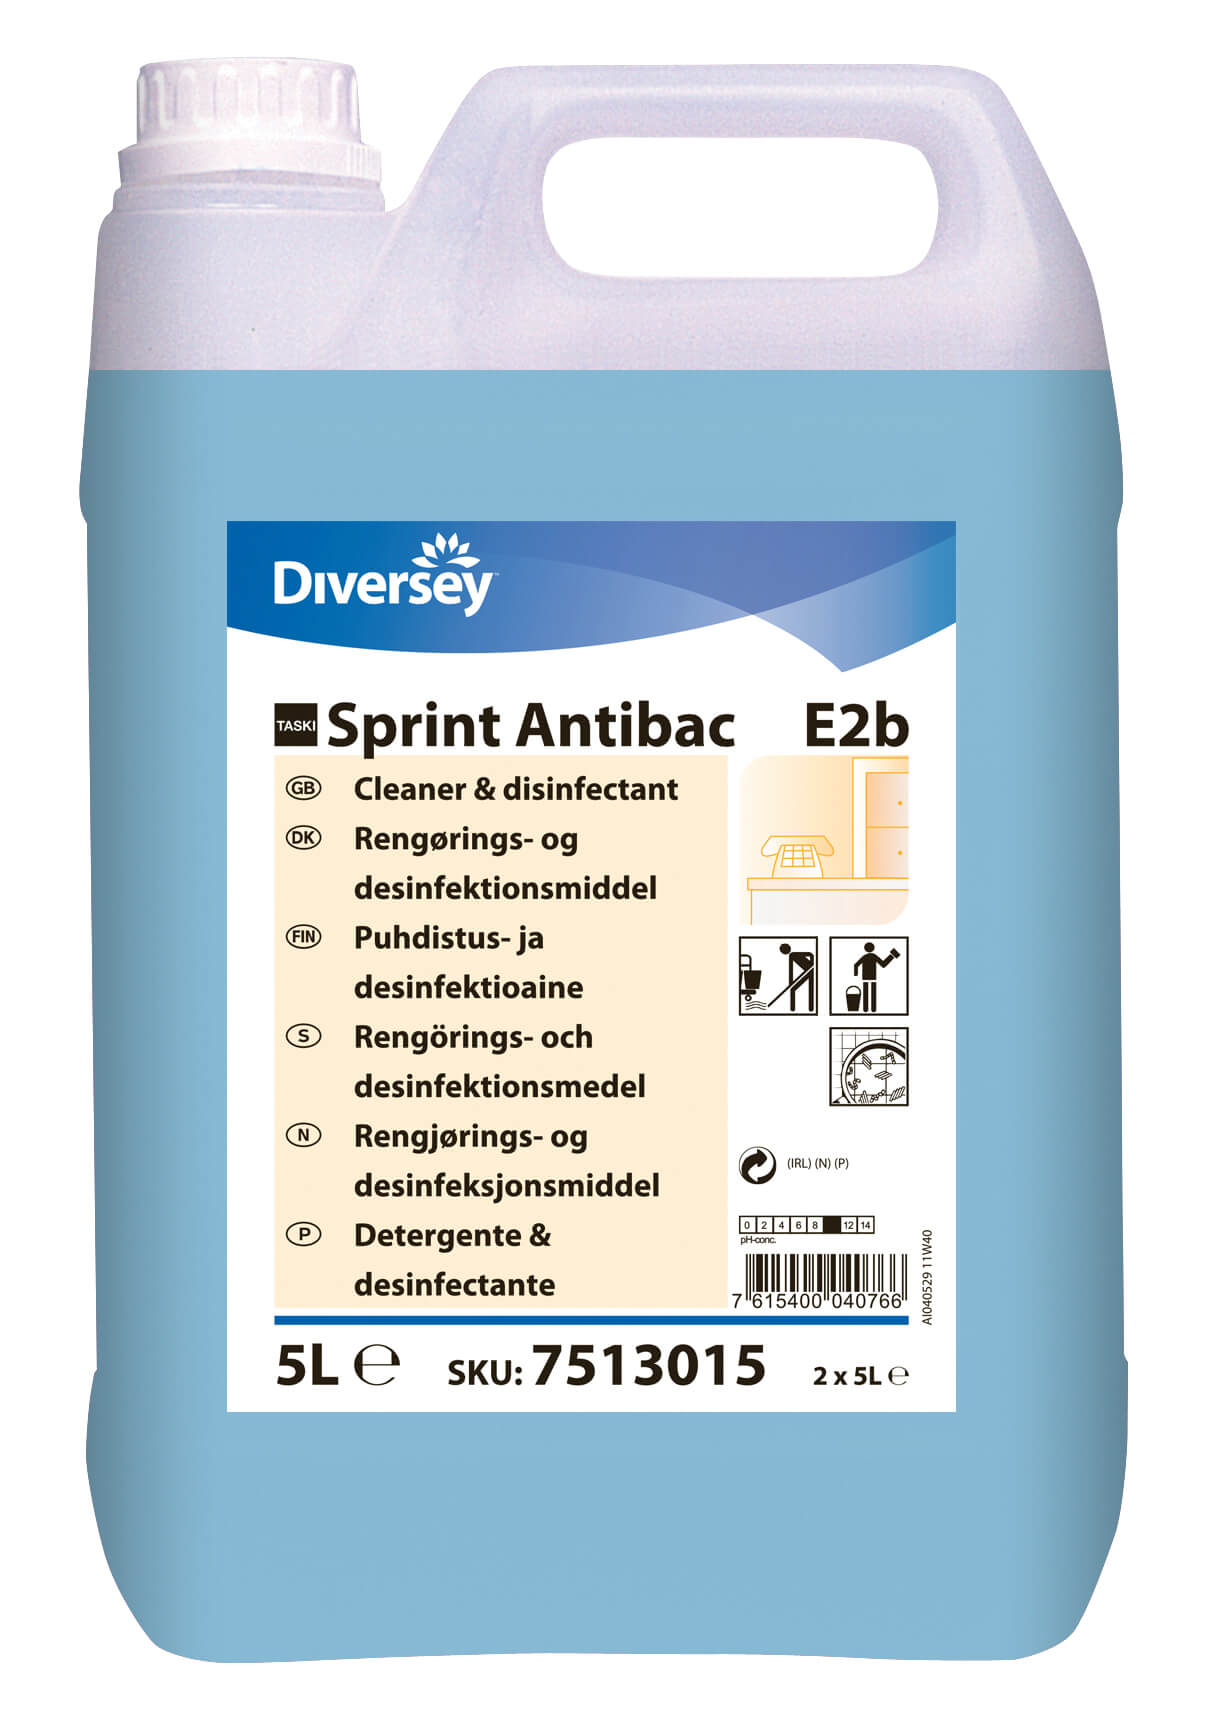 Sprint Antibac